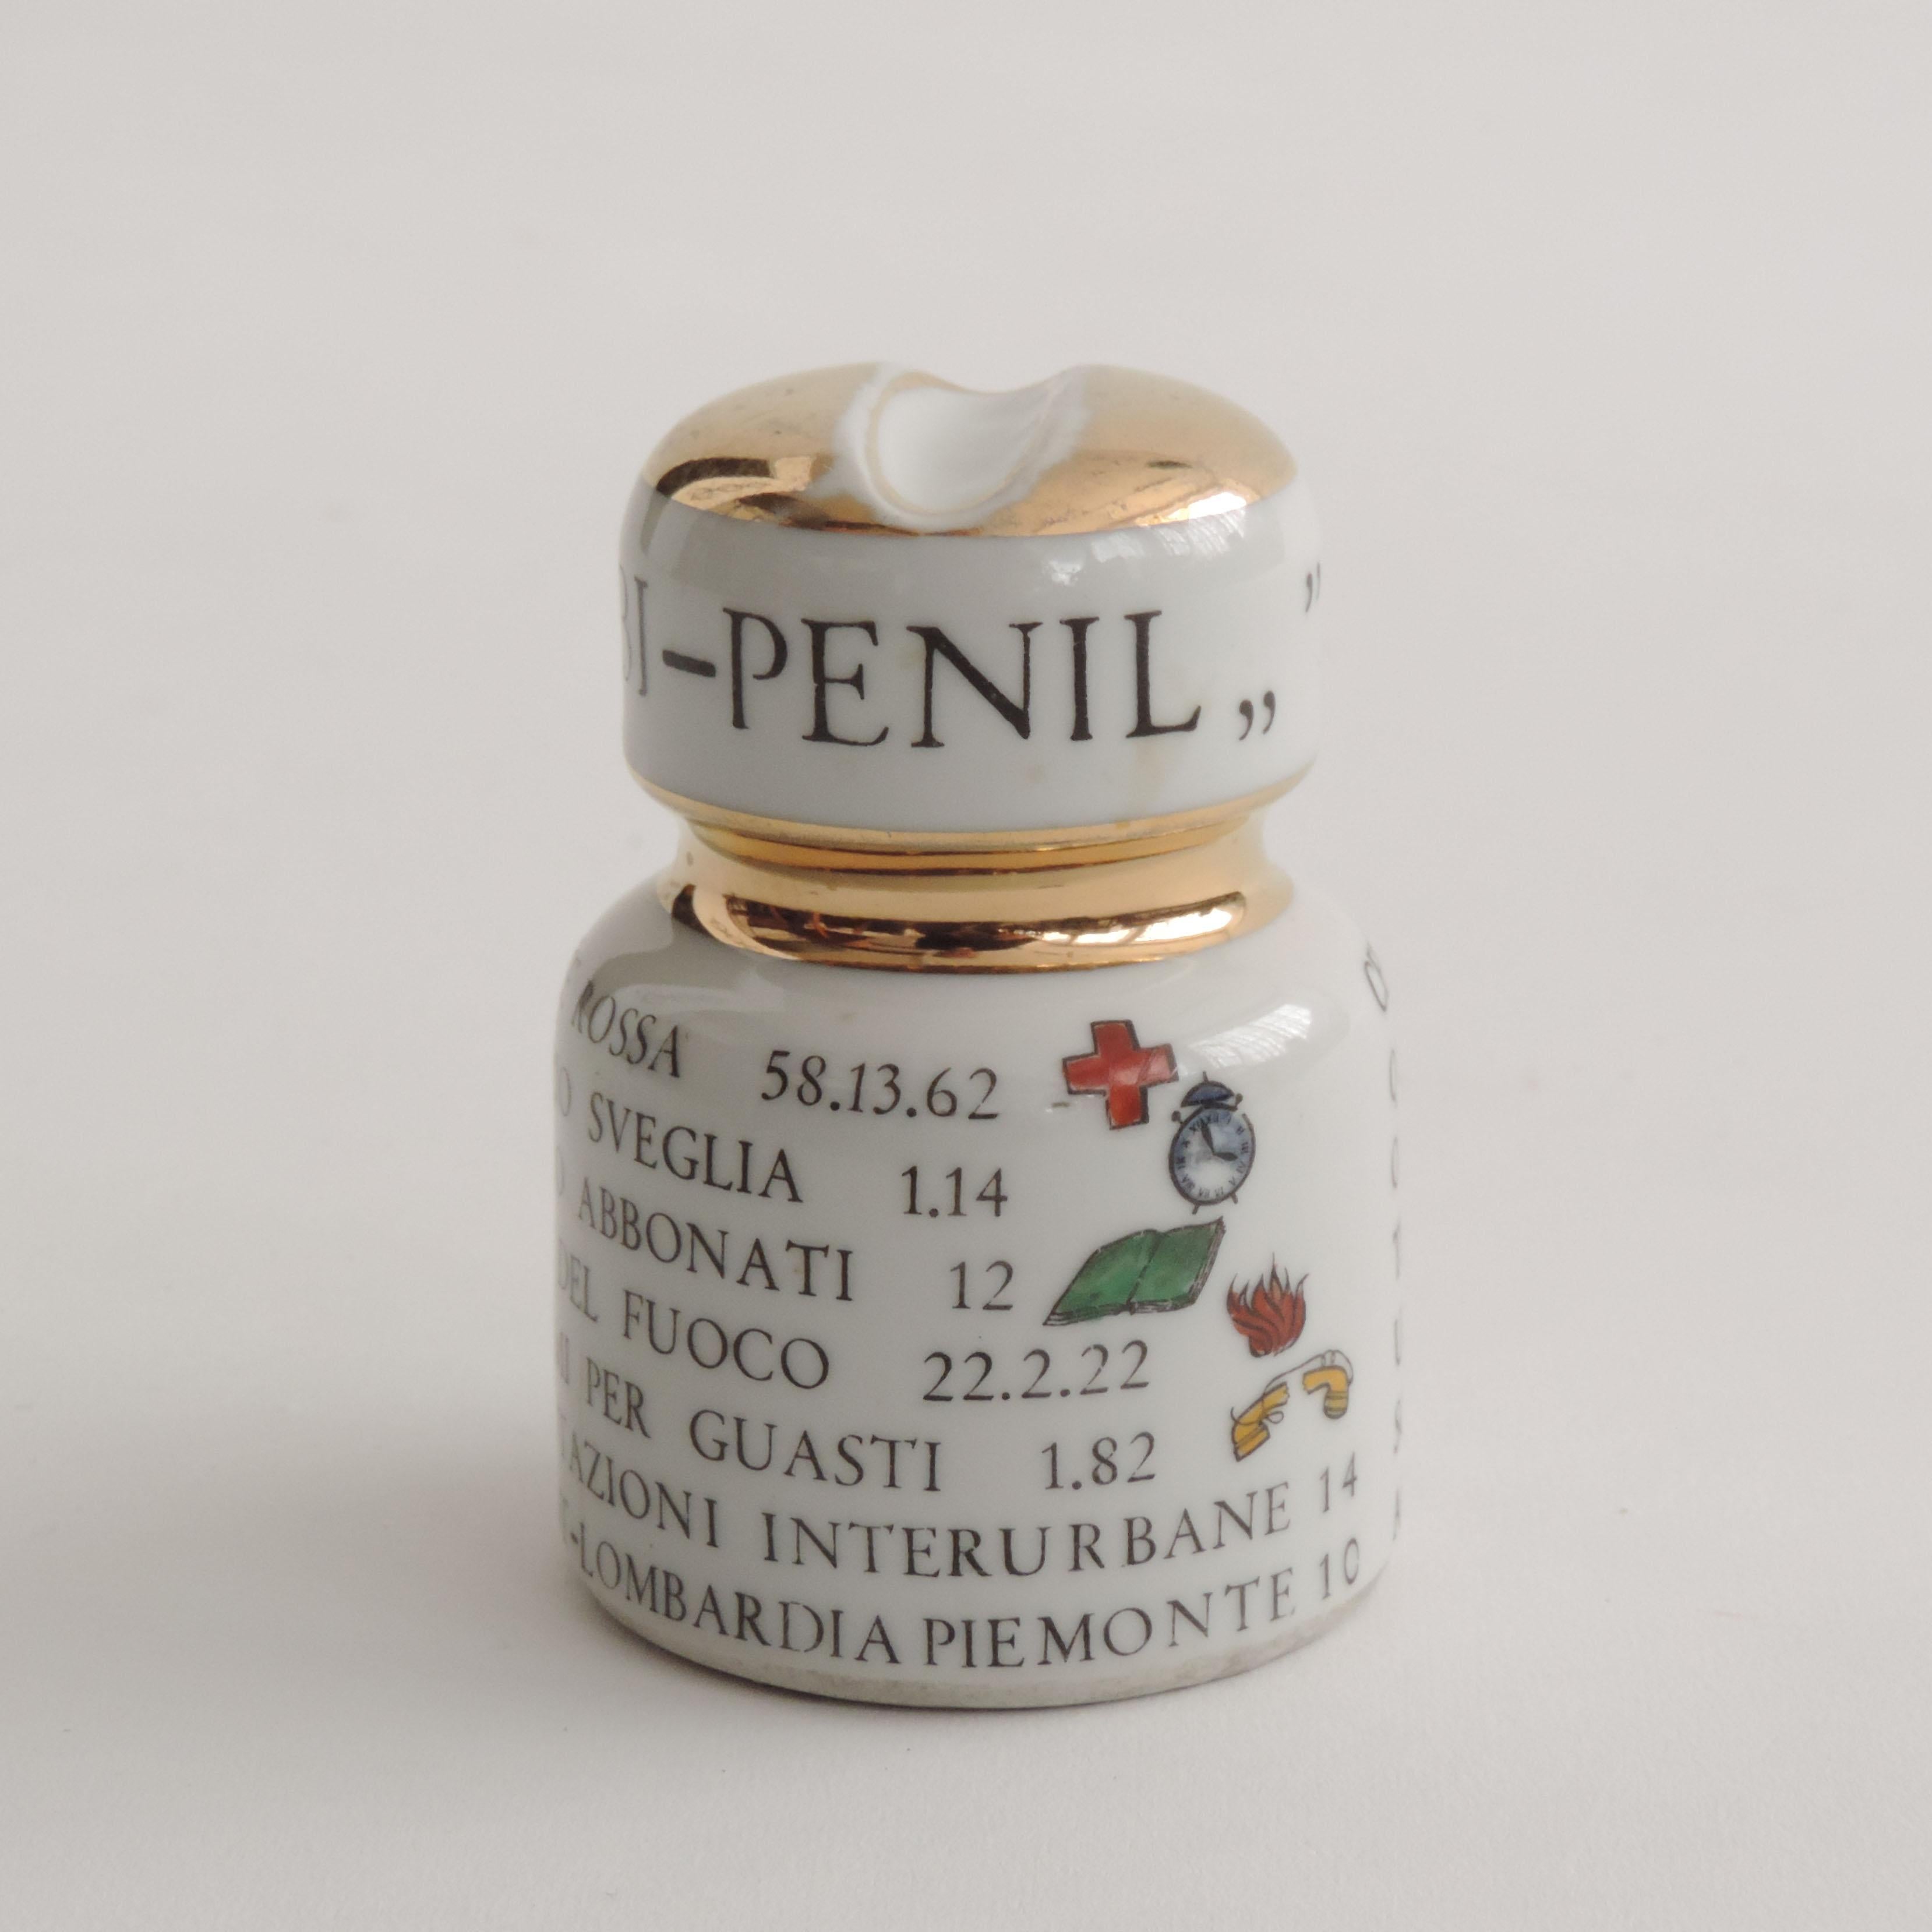 1950s pill bottle